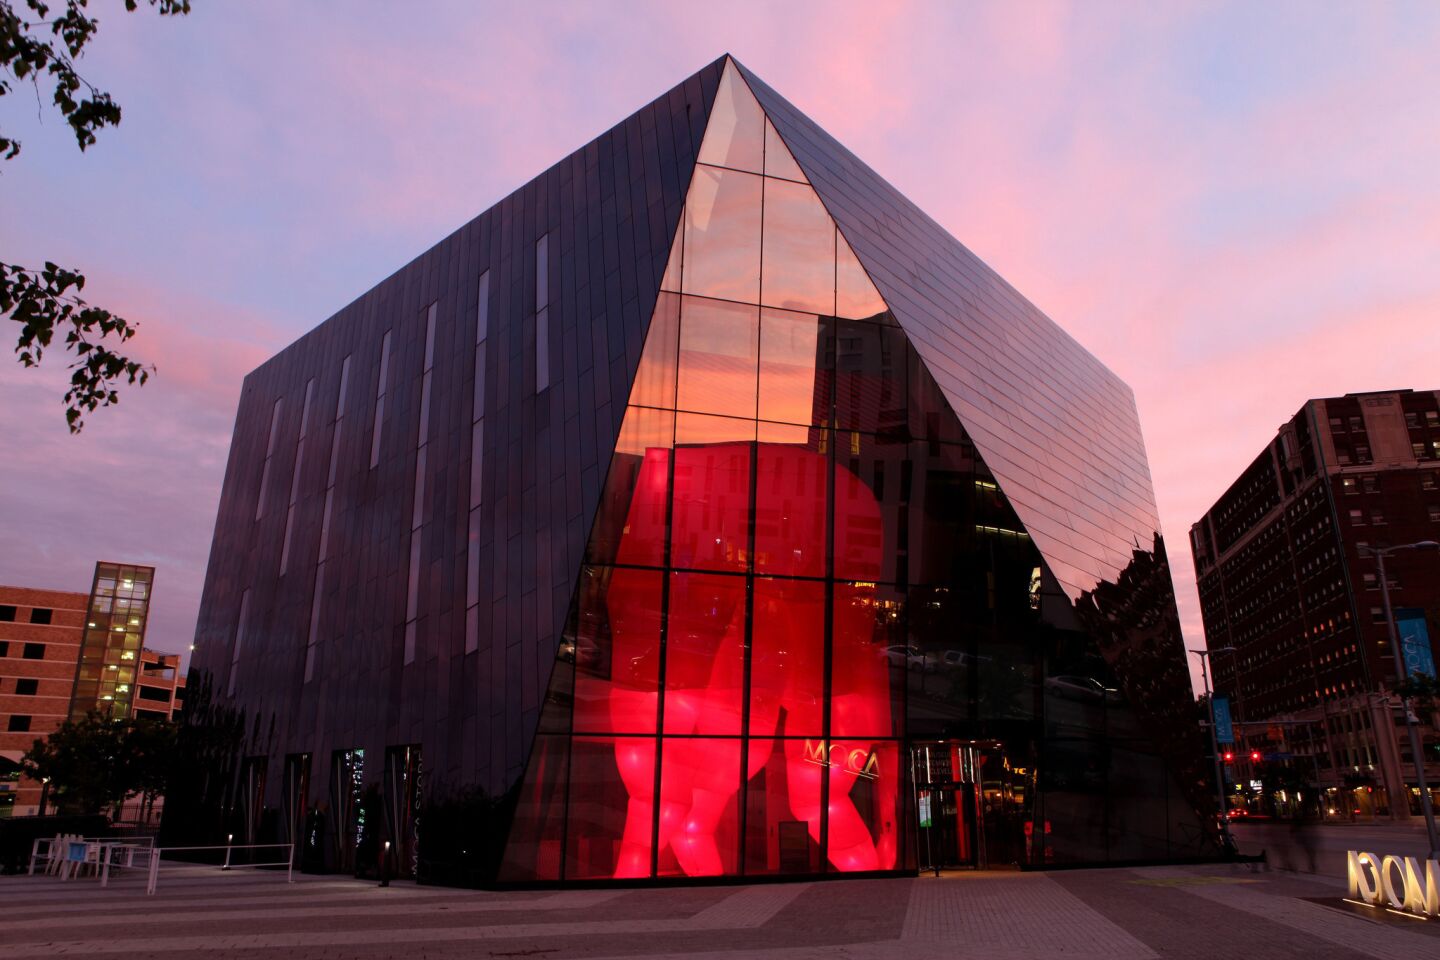 The gem-like Museum of Contemporary Art Cleveland.